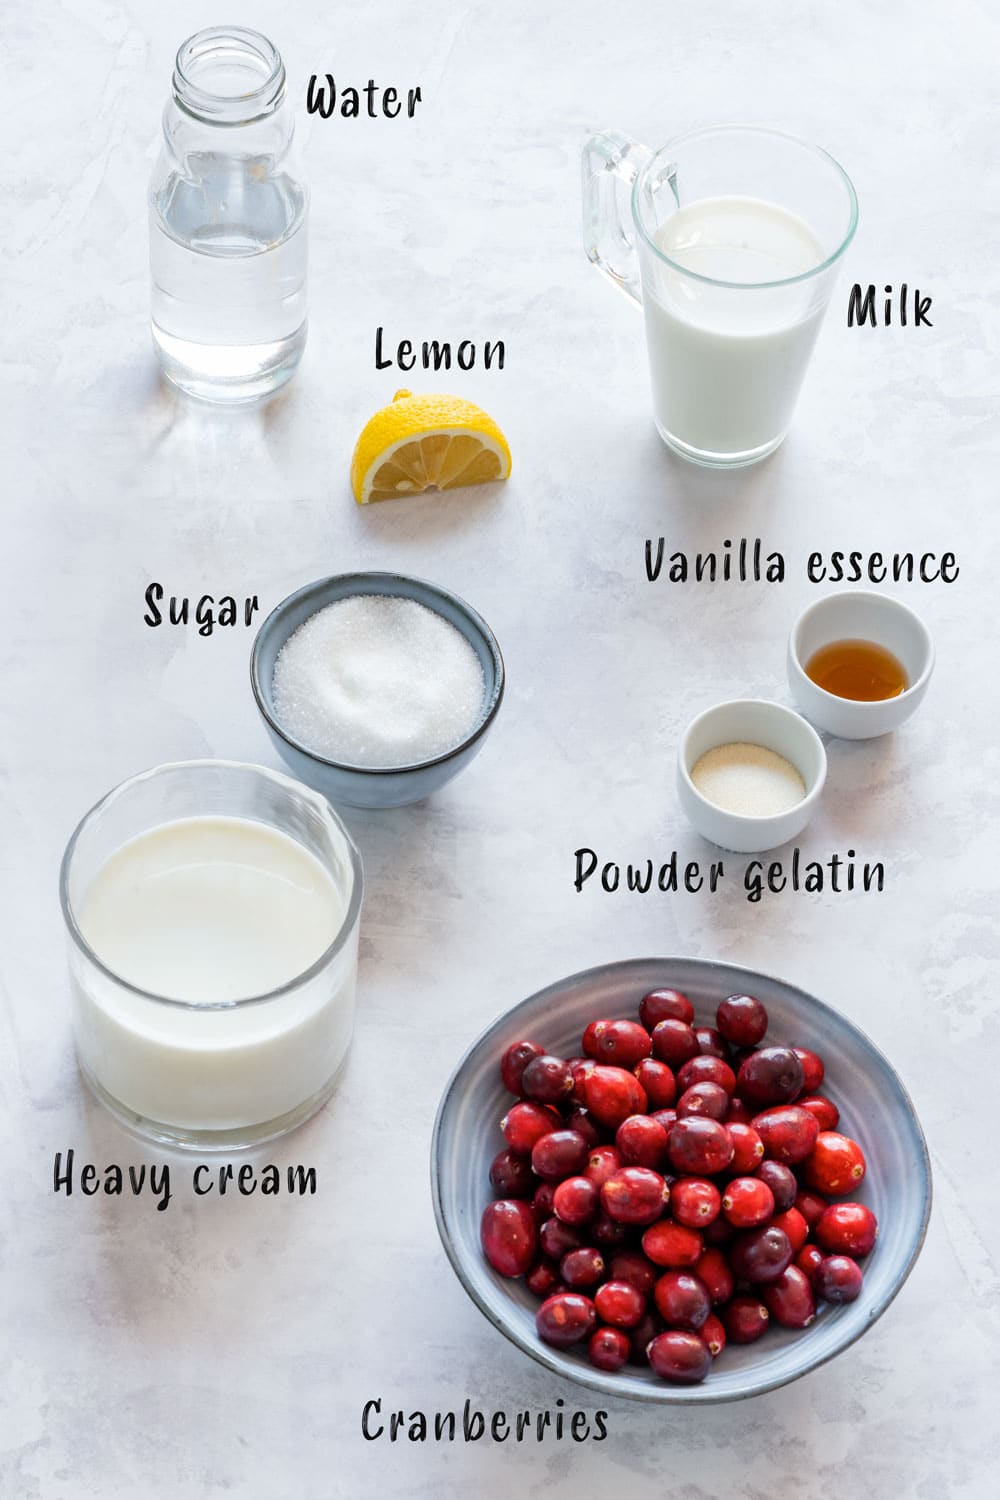 Ingredients of cranberry panna cotta - fresh cranberries, cream, milk, sugar, gelatin, vanilla essence and lemon.